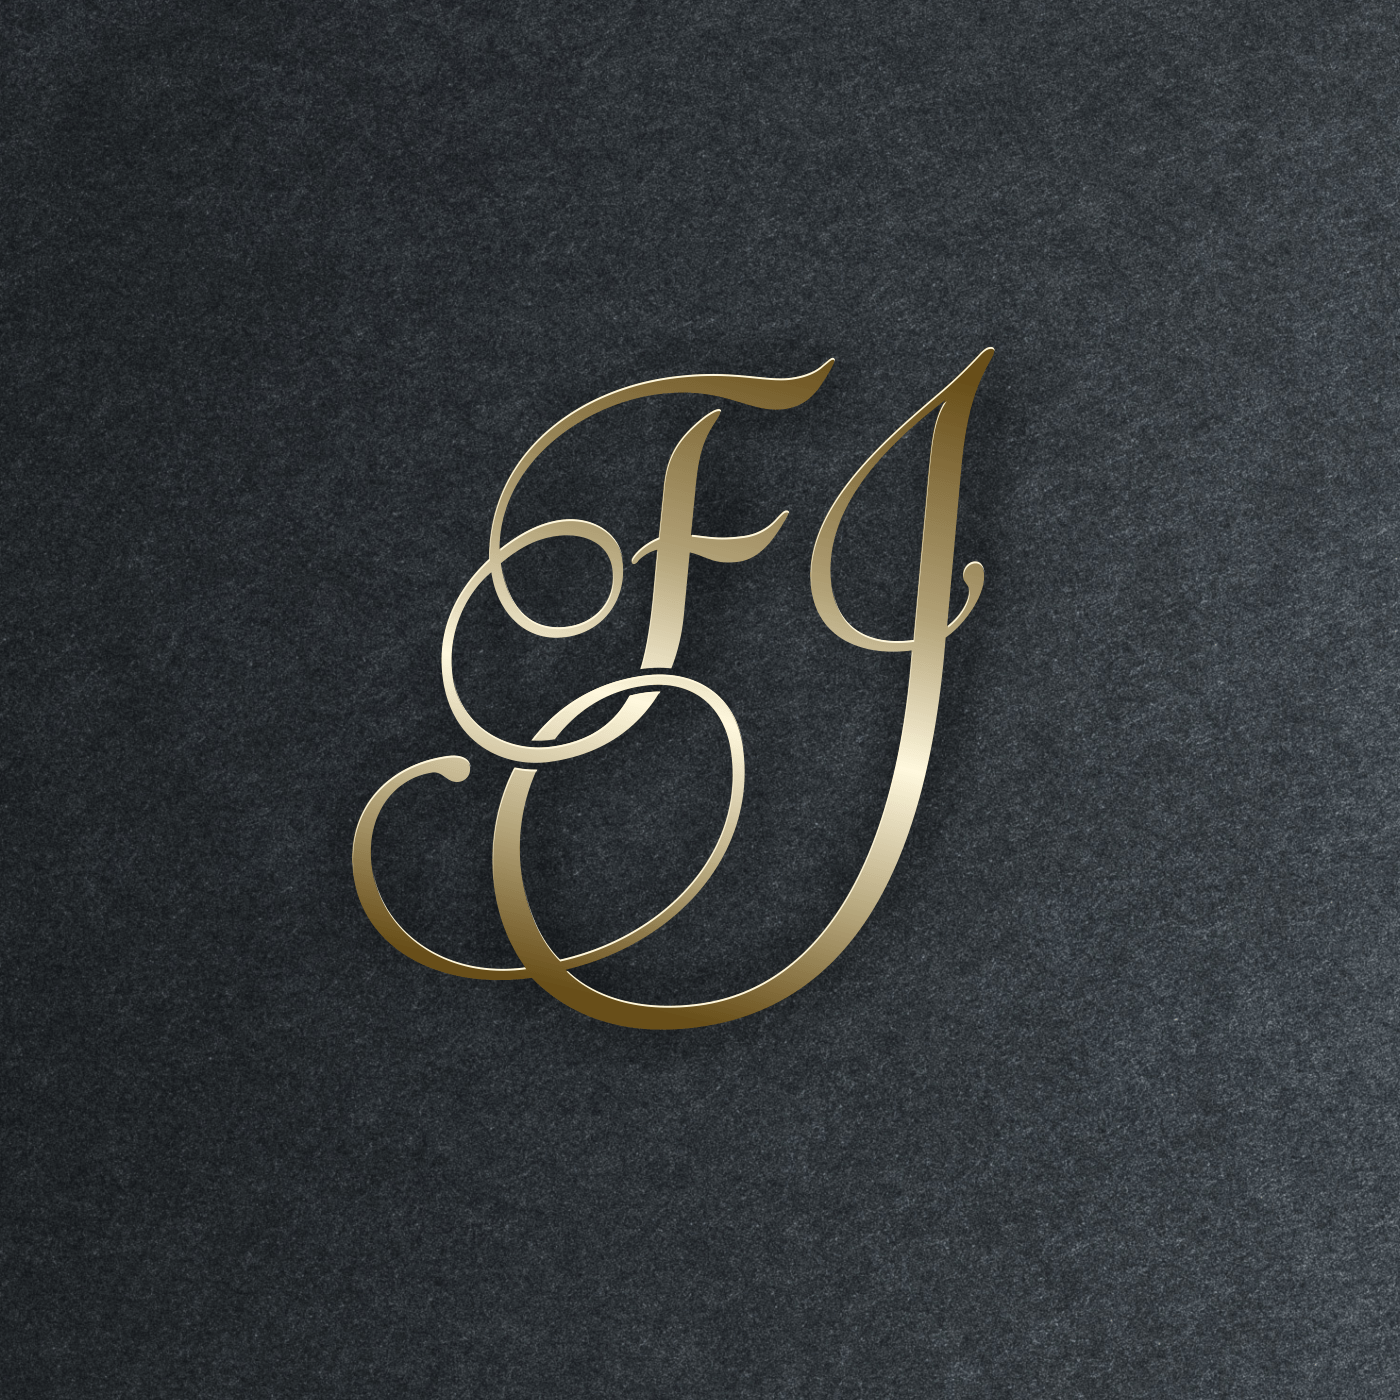 FJ Logo - Elegant, Upmarket, Wedding Logo Design for FJ or FJ